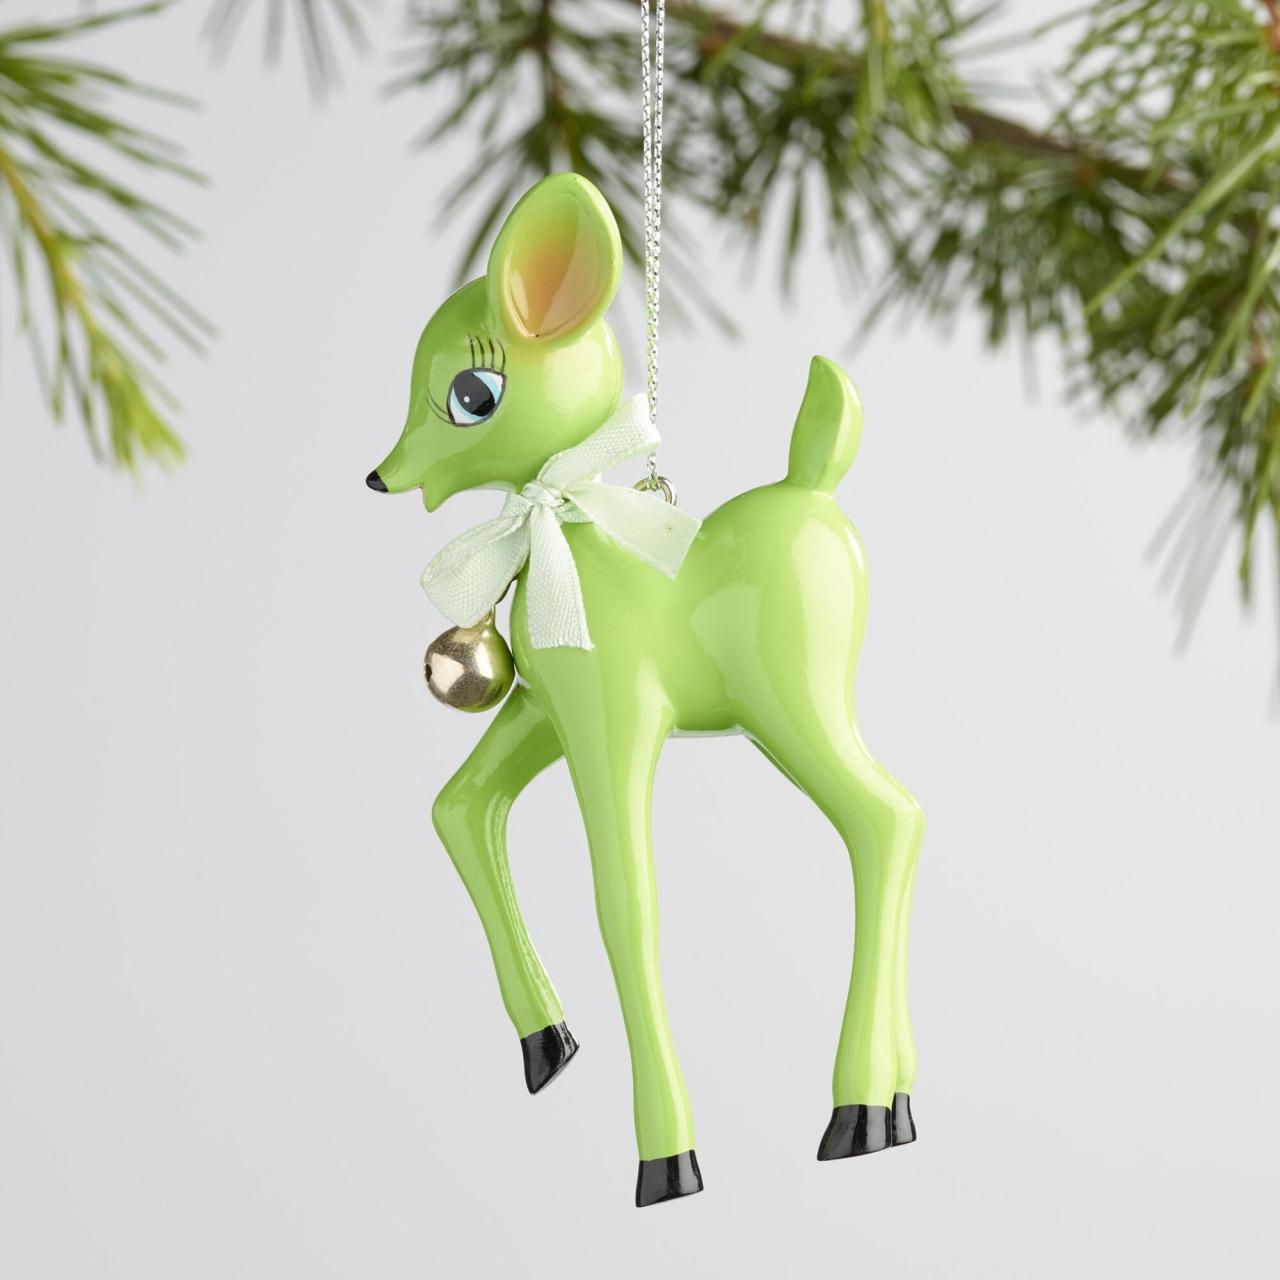 Deer ornaments for christmas tree